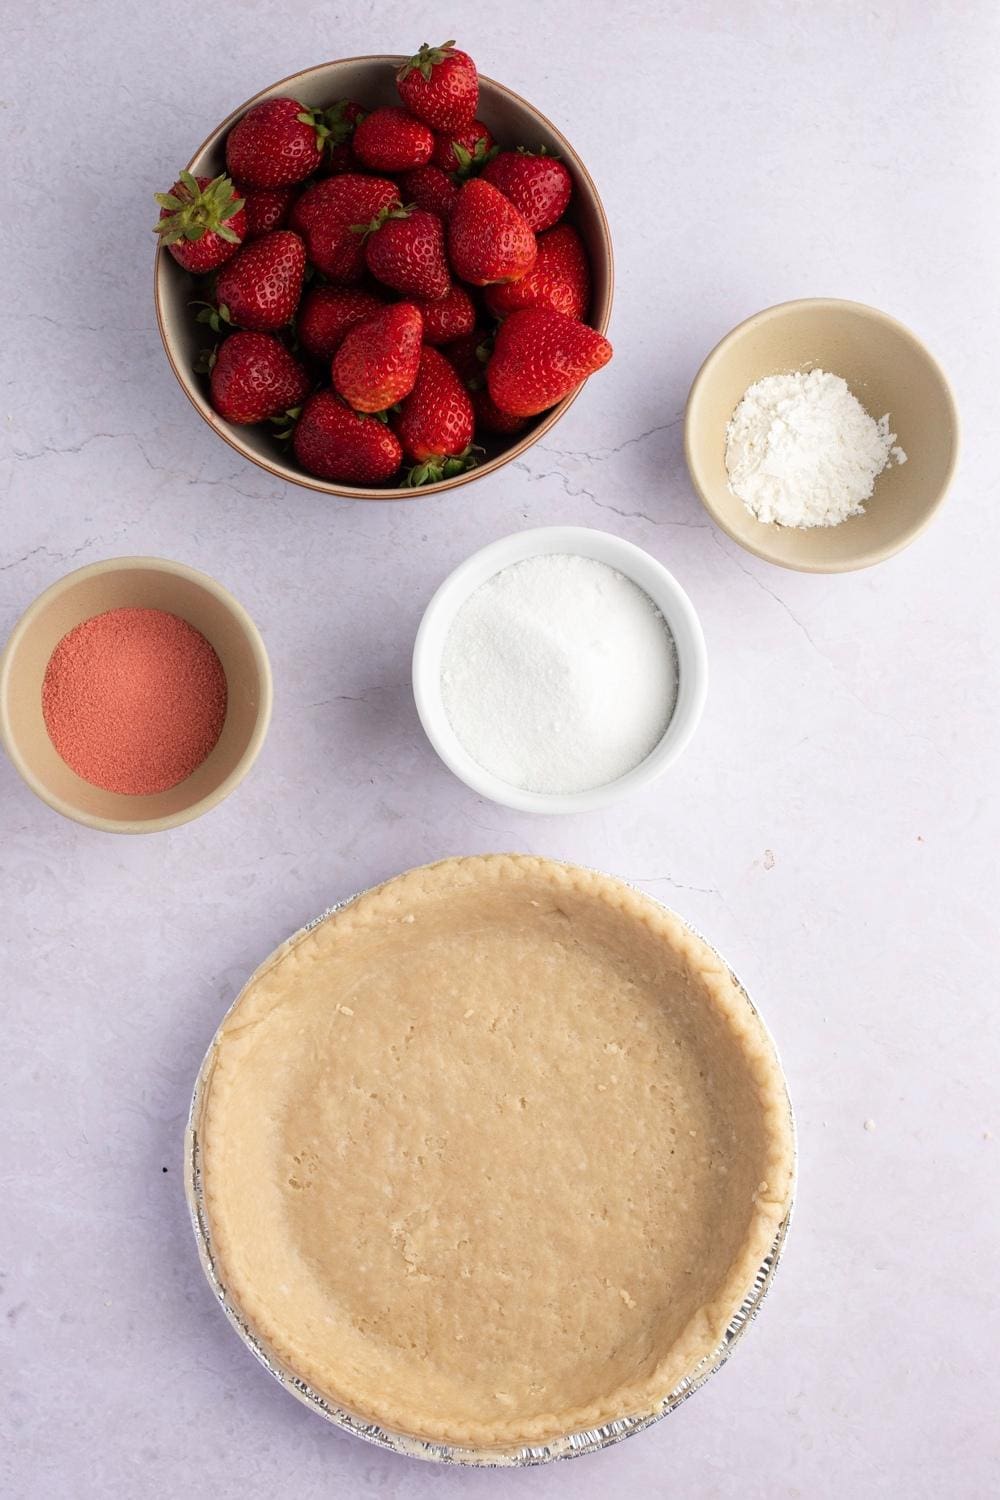 Shoney's Strawberry Pie Ingredients: Strawberries, sugar, cornstarch, jello, pie shel
